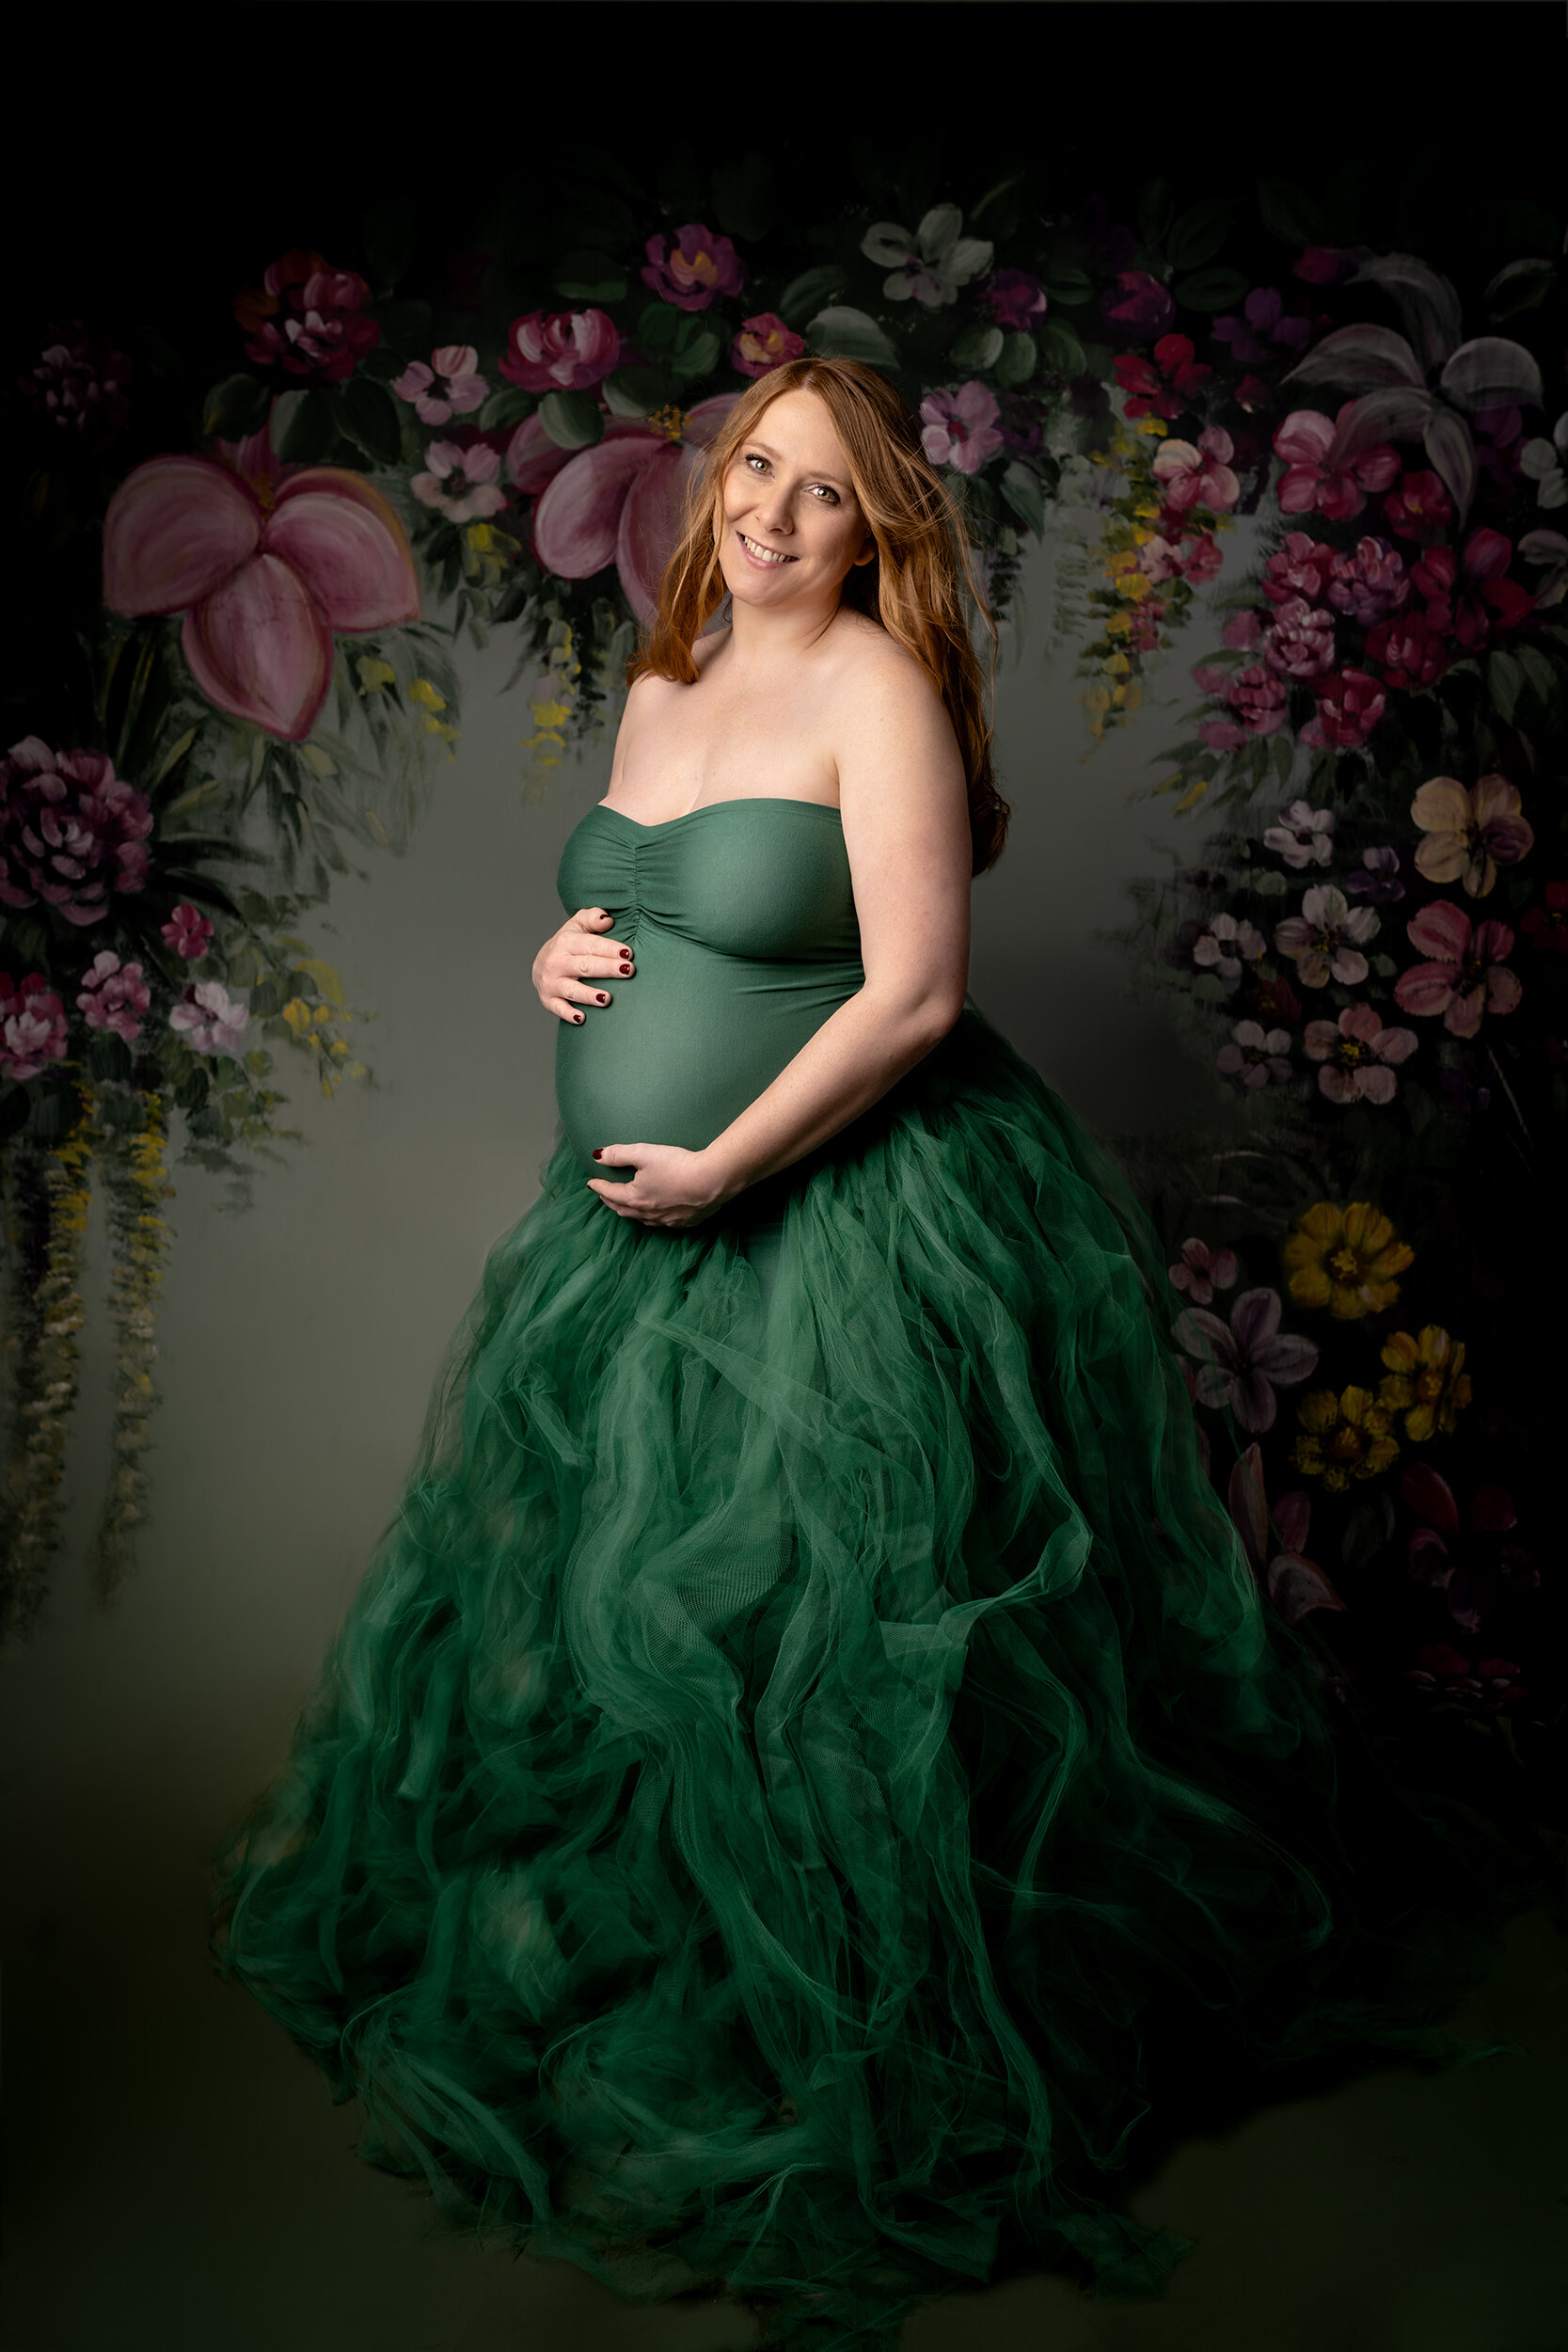 maternityphotographybyminimoostudios.jpg